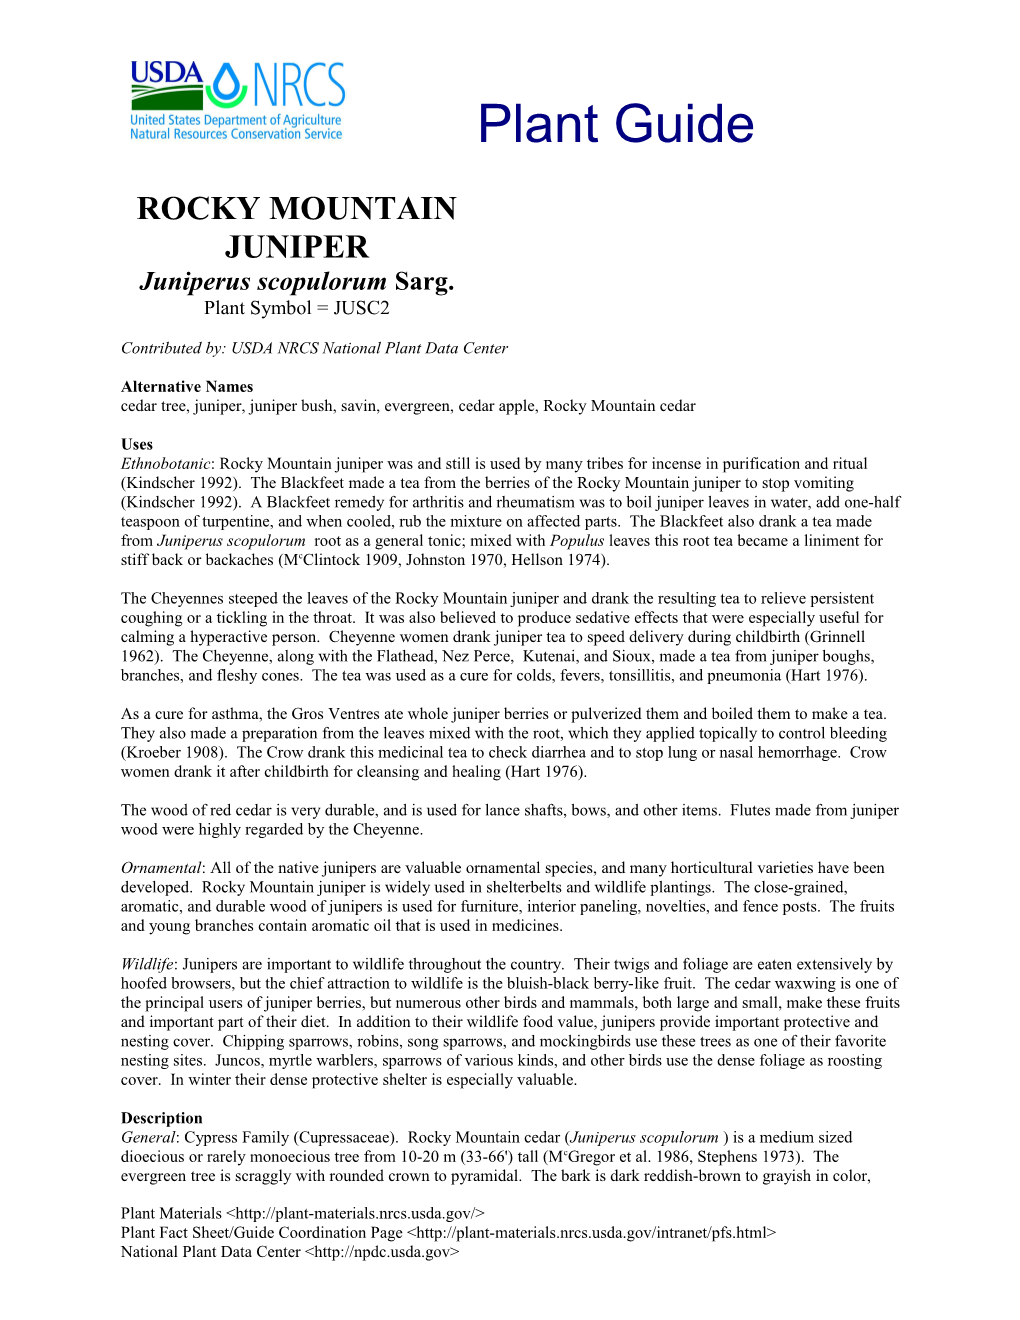 Rocky Mountain Juniper